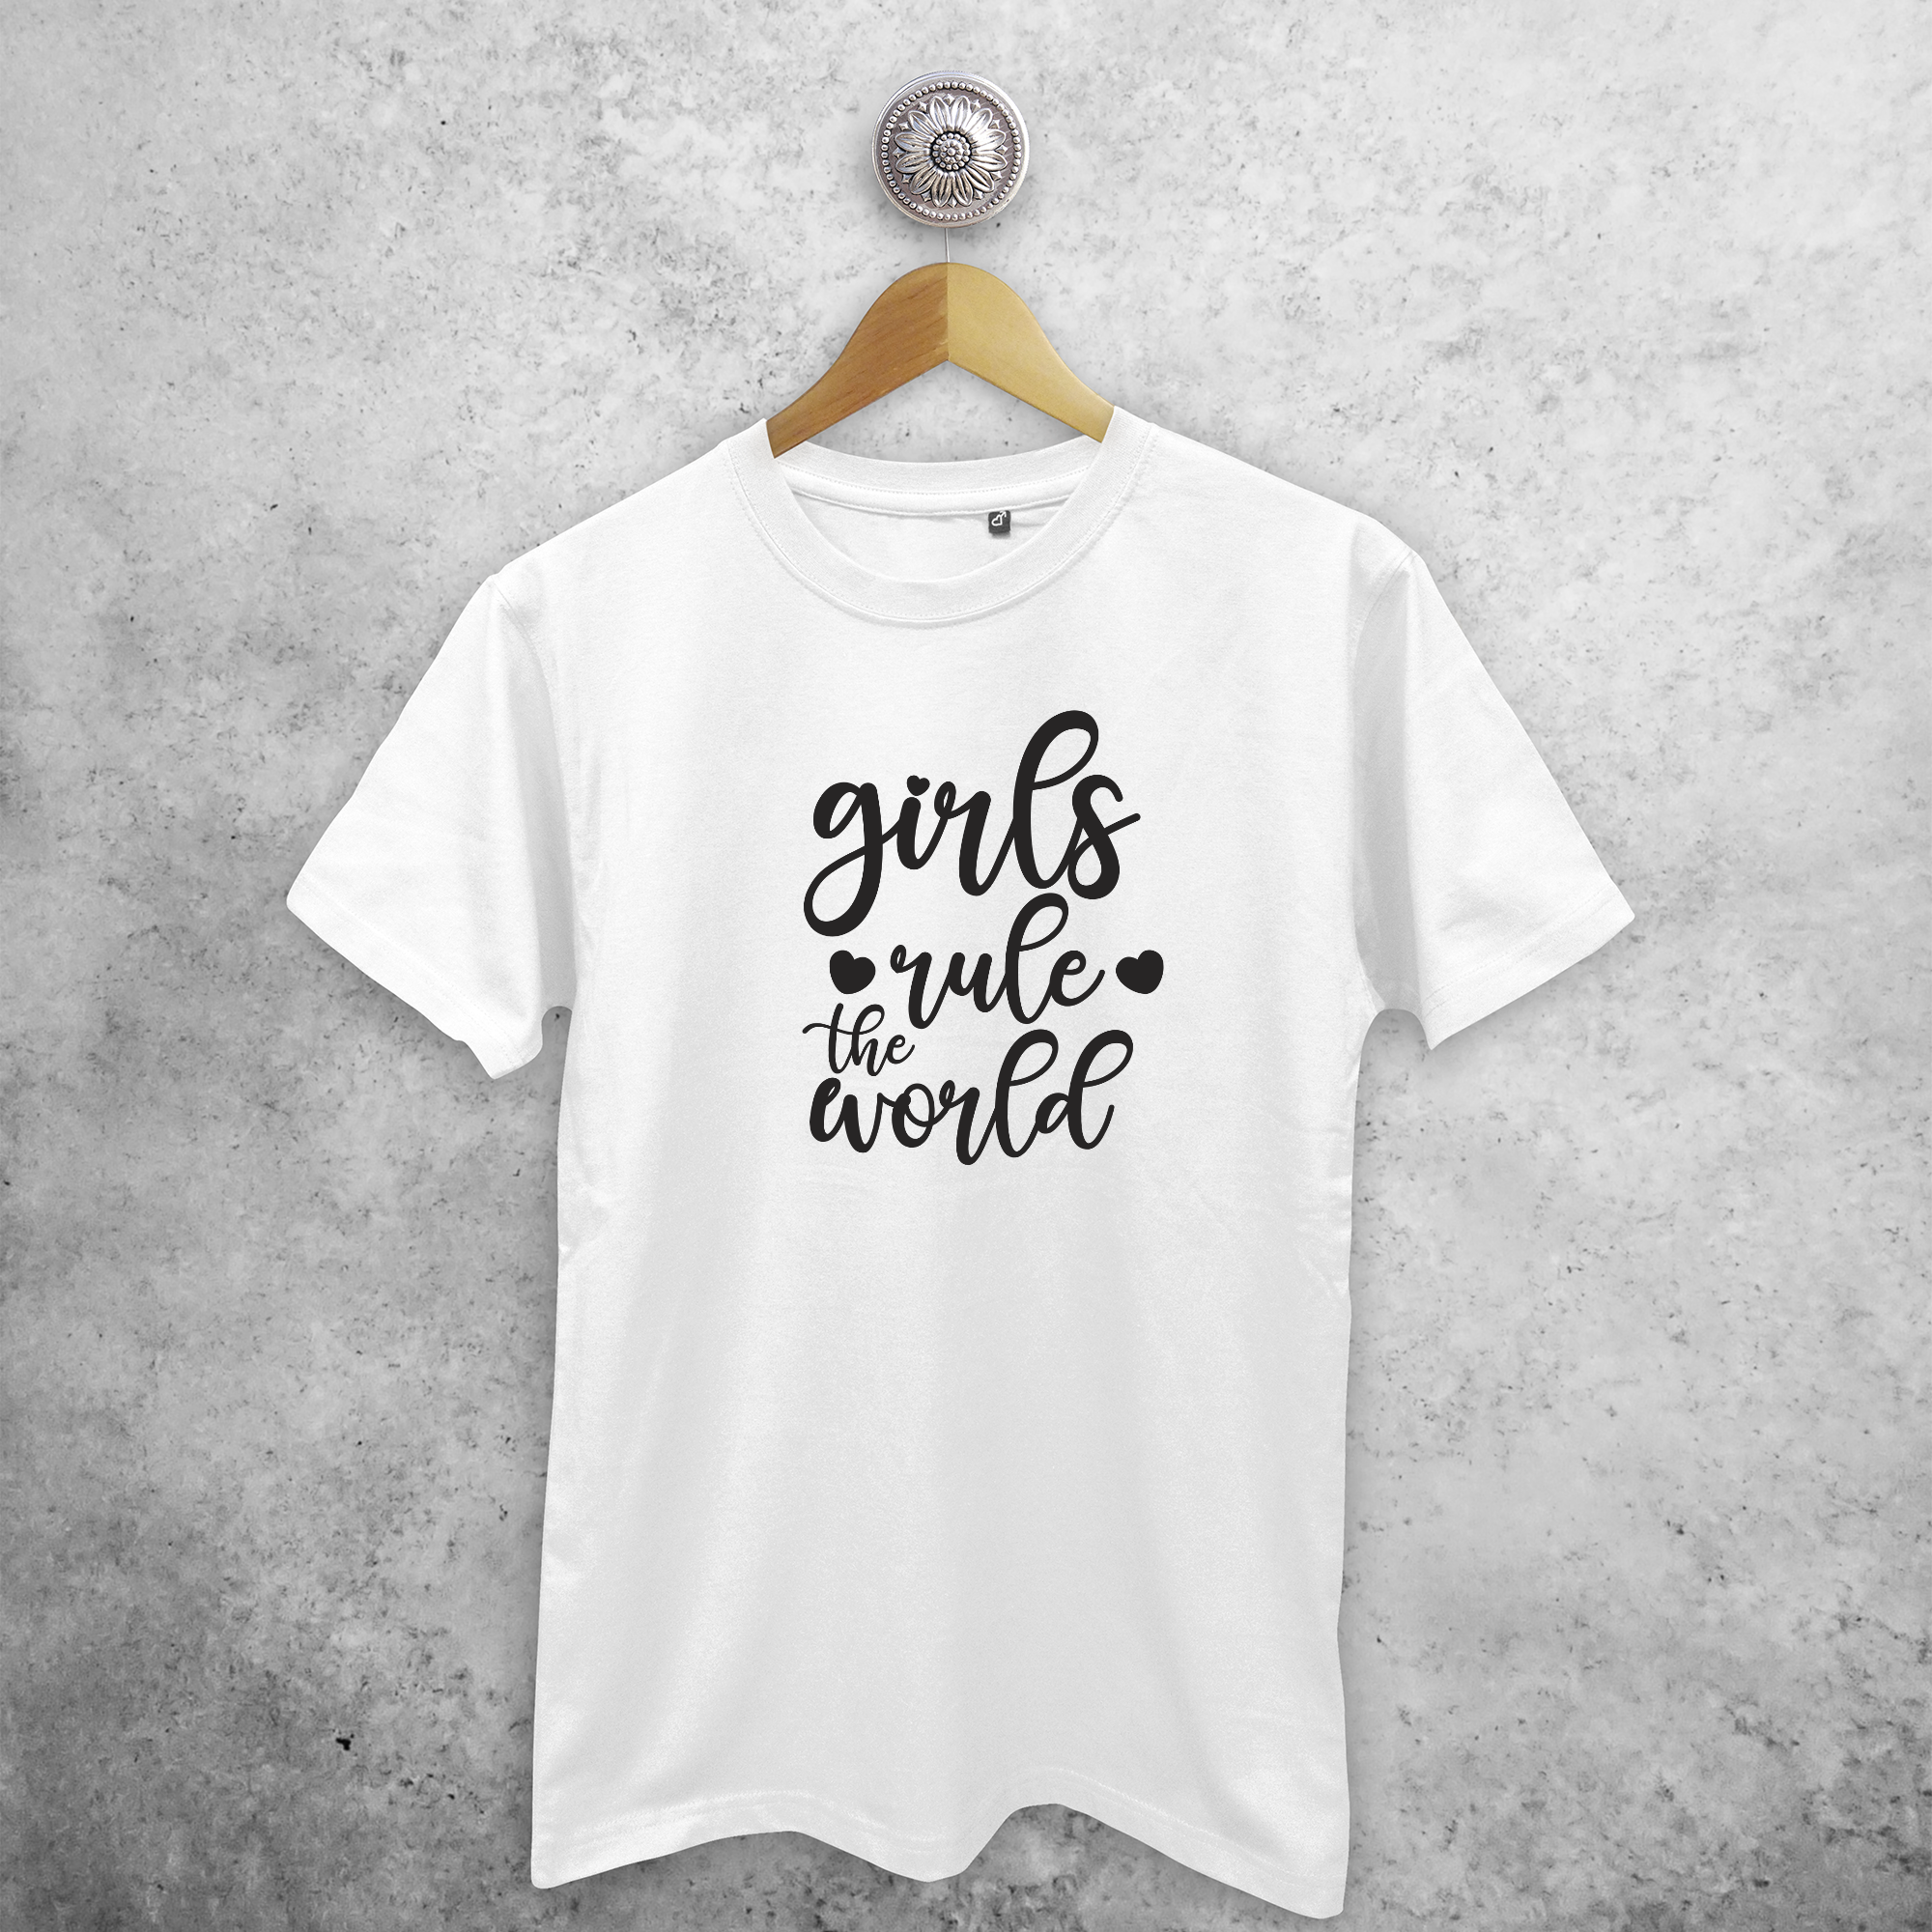 'Girls rule the world' adult shirt